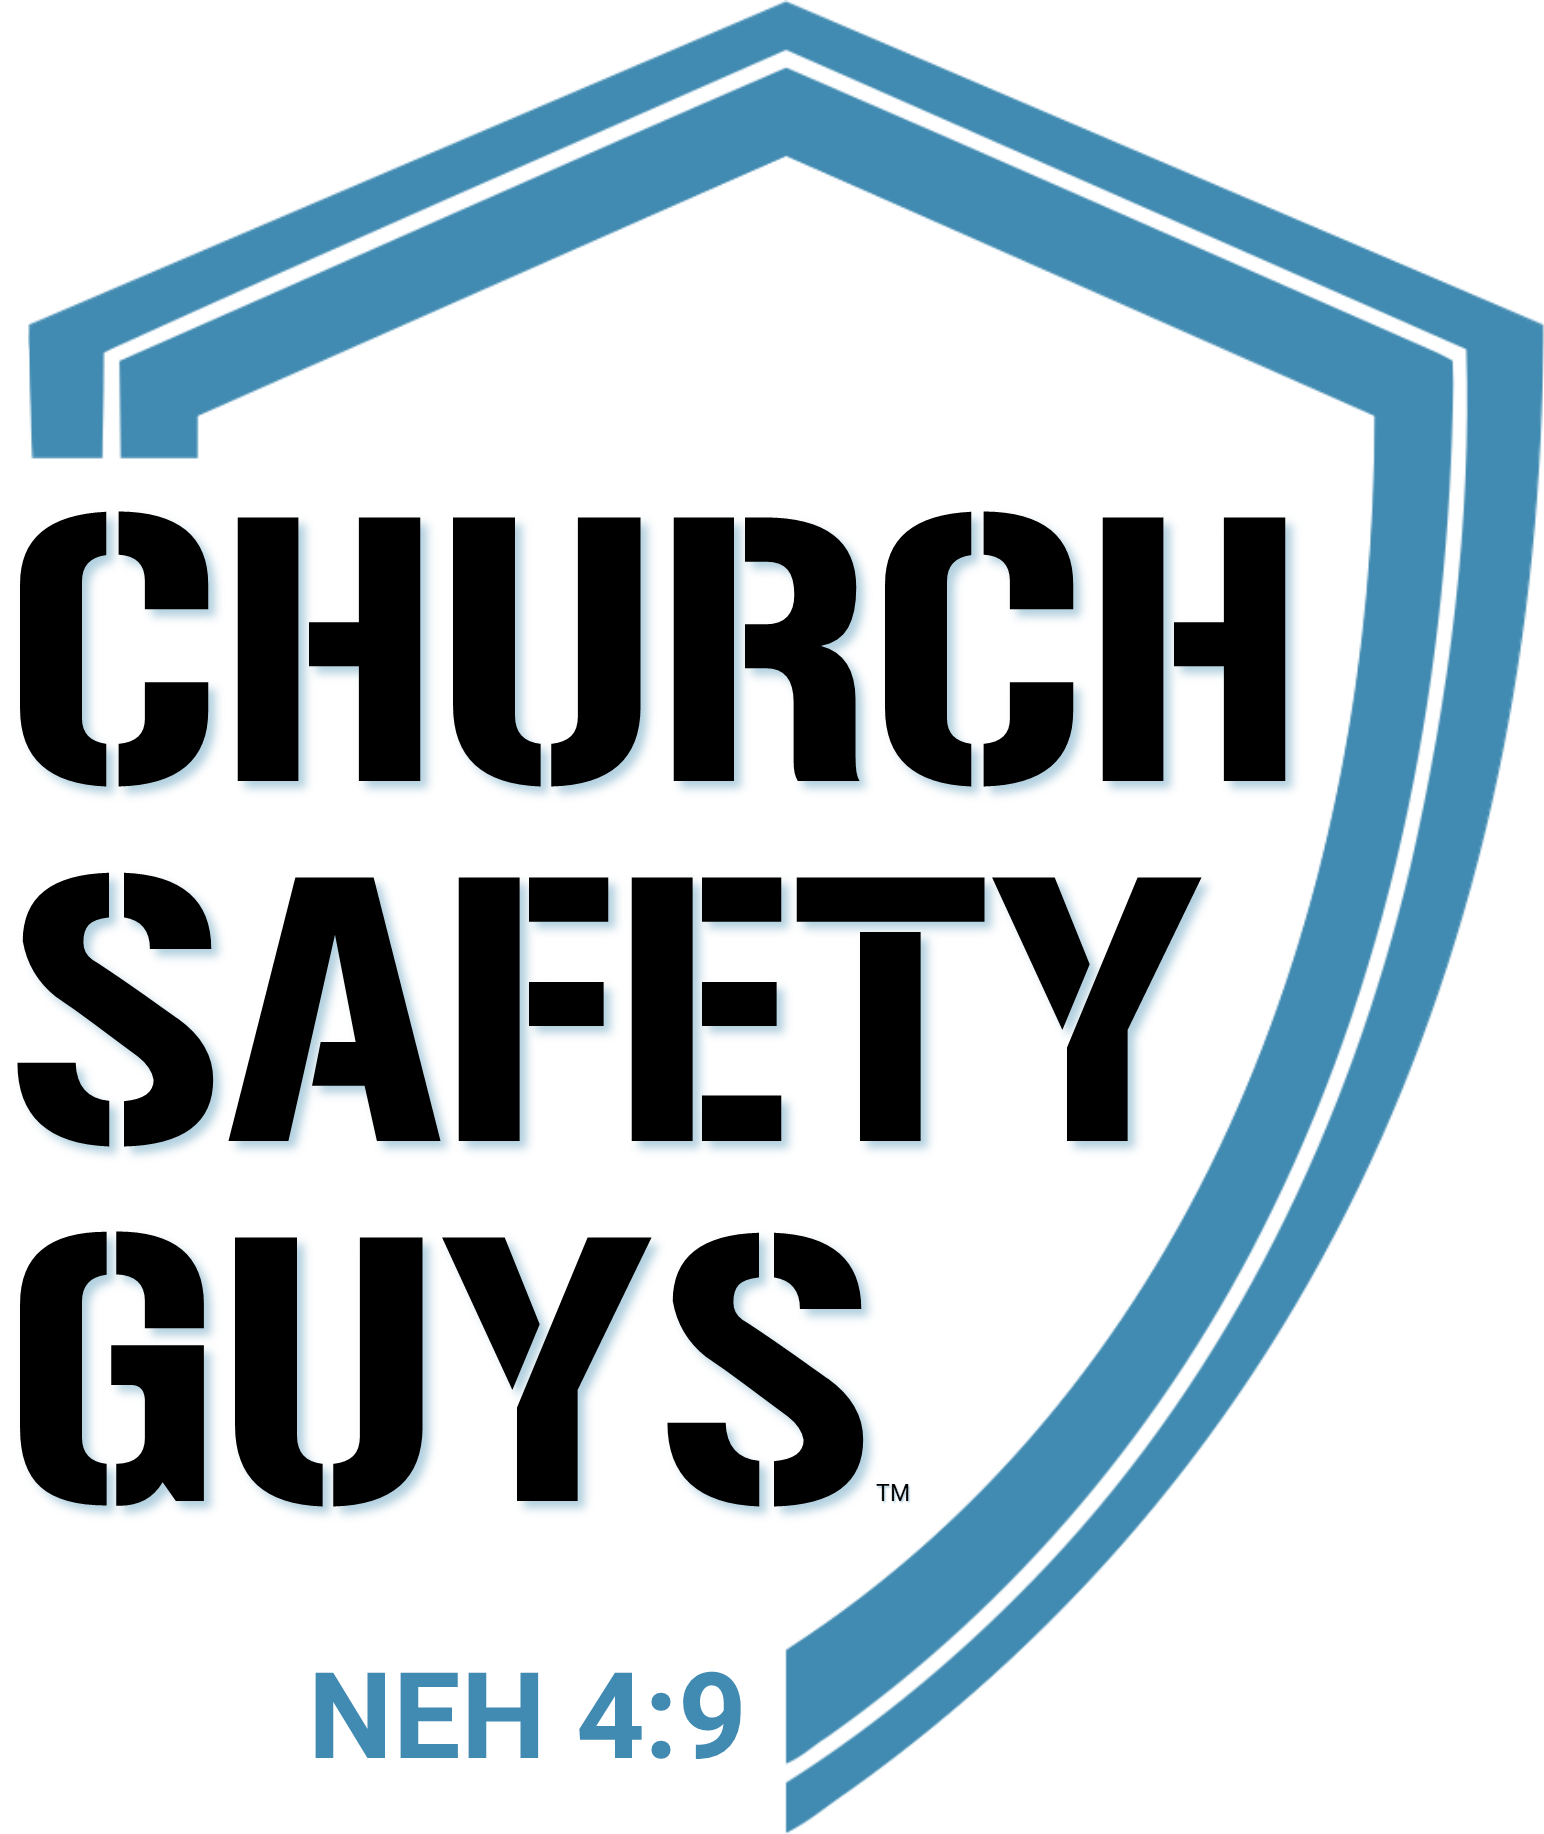 Church Safety Guys logo